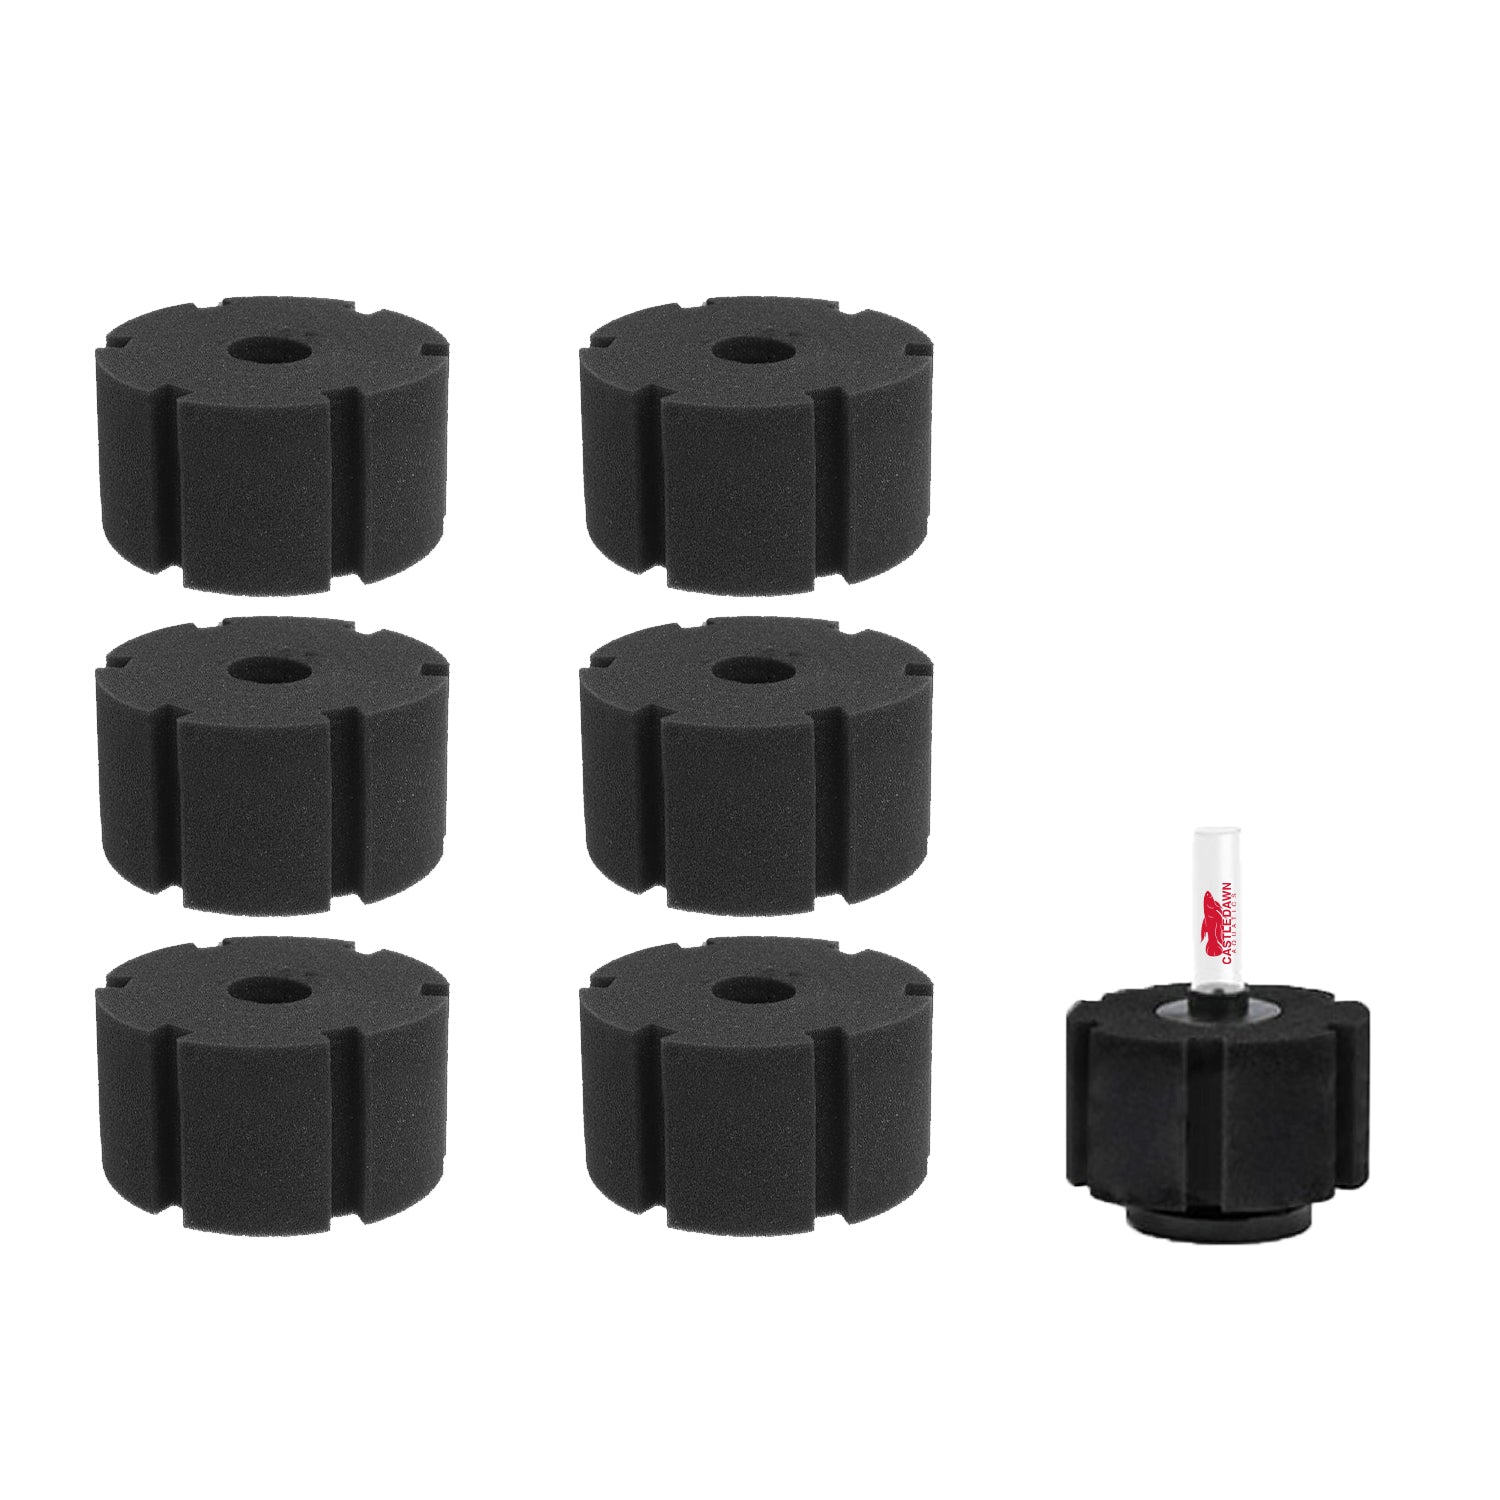 Medium Filter Replacement Layered Sponges XY-280 Pack of 6 - Castle Dawn Aquatics